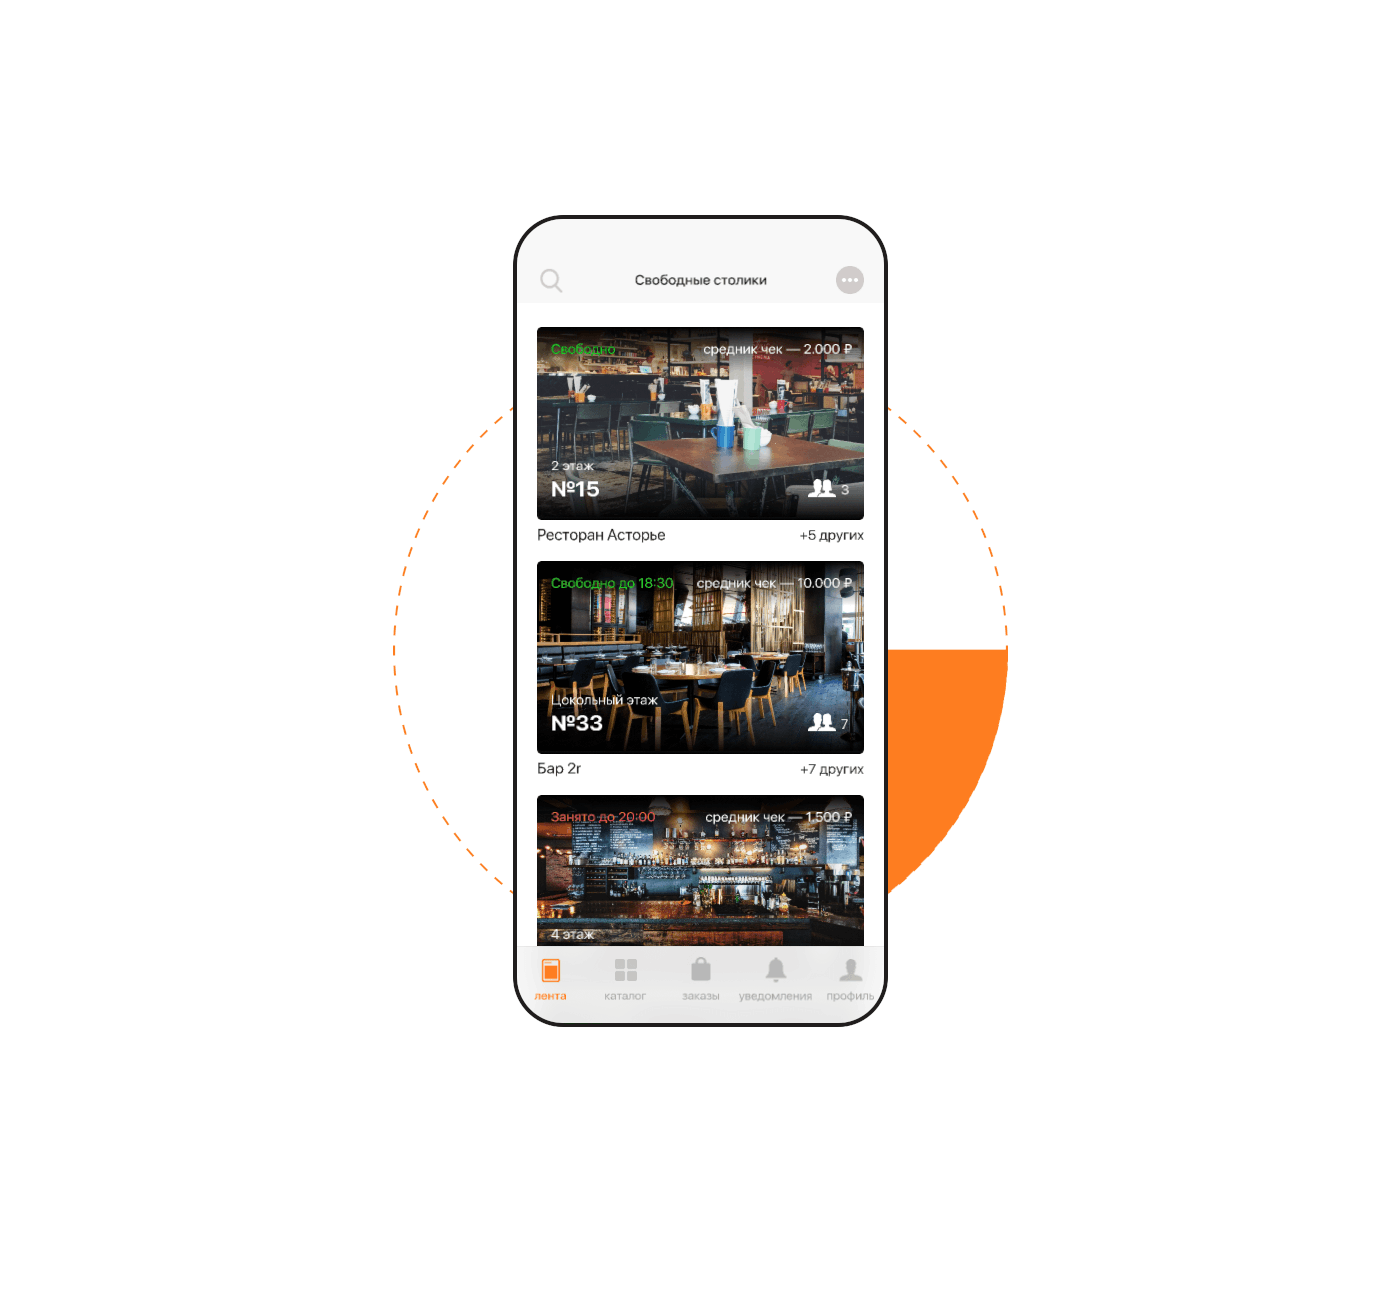 app booked design Interface restaurant UI ux